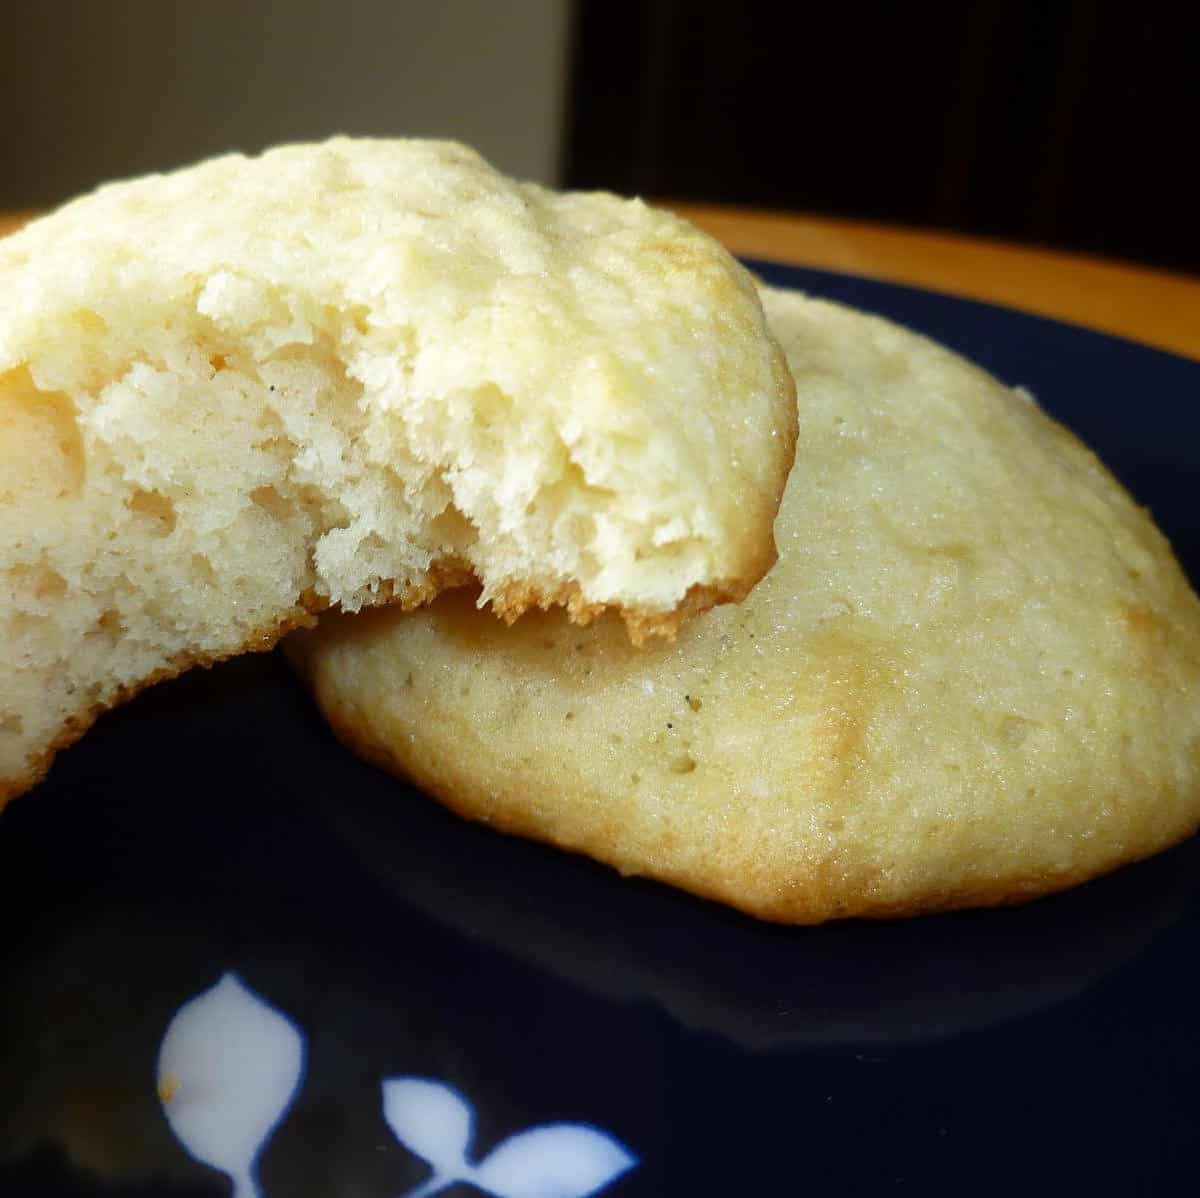  Bite into a fluffy, golden brown Pennsylvania Dutch Soft Sugar Cookie.